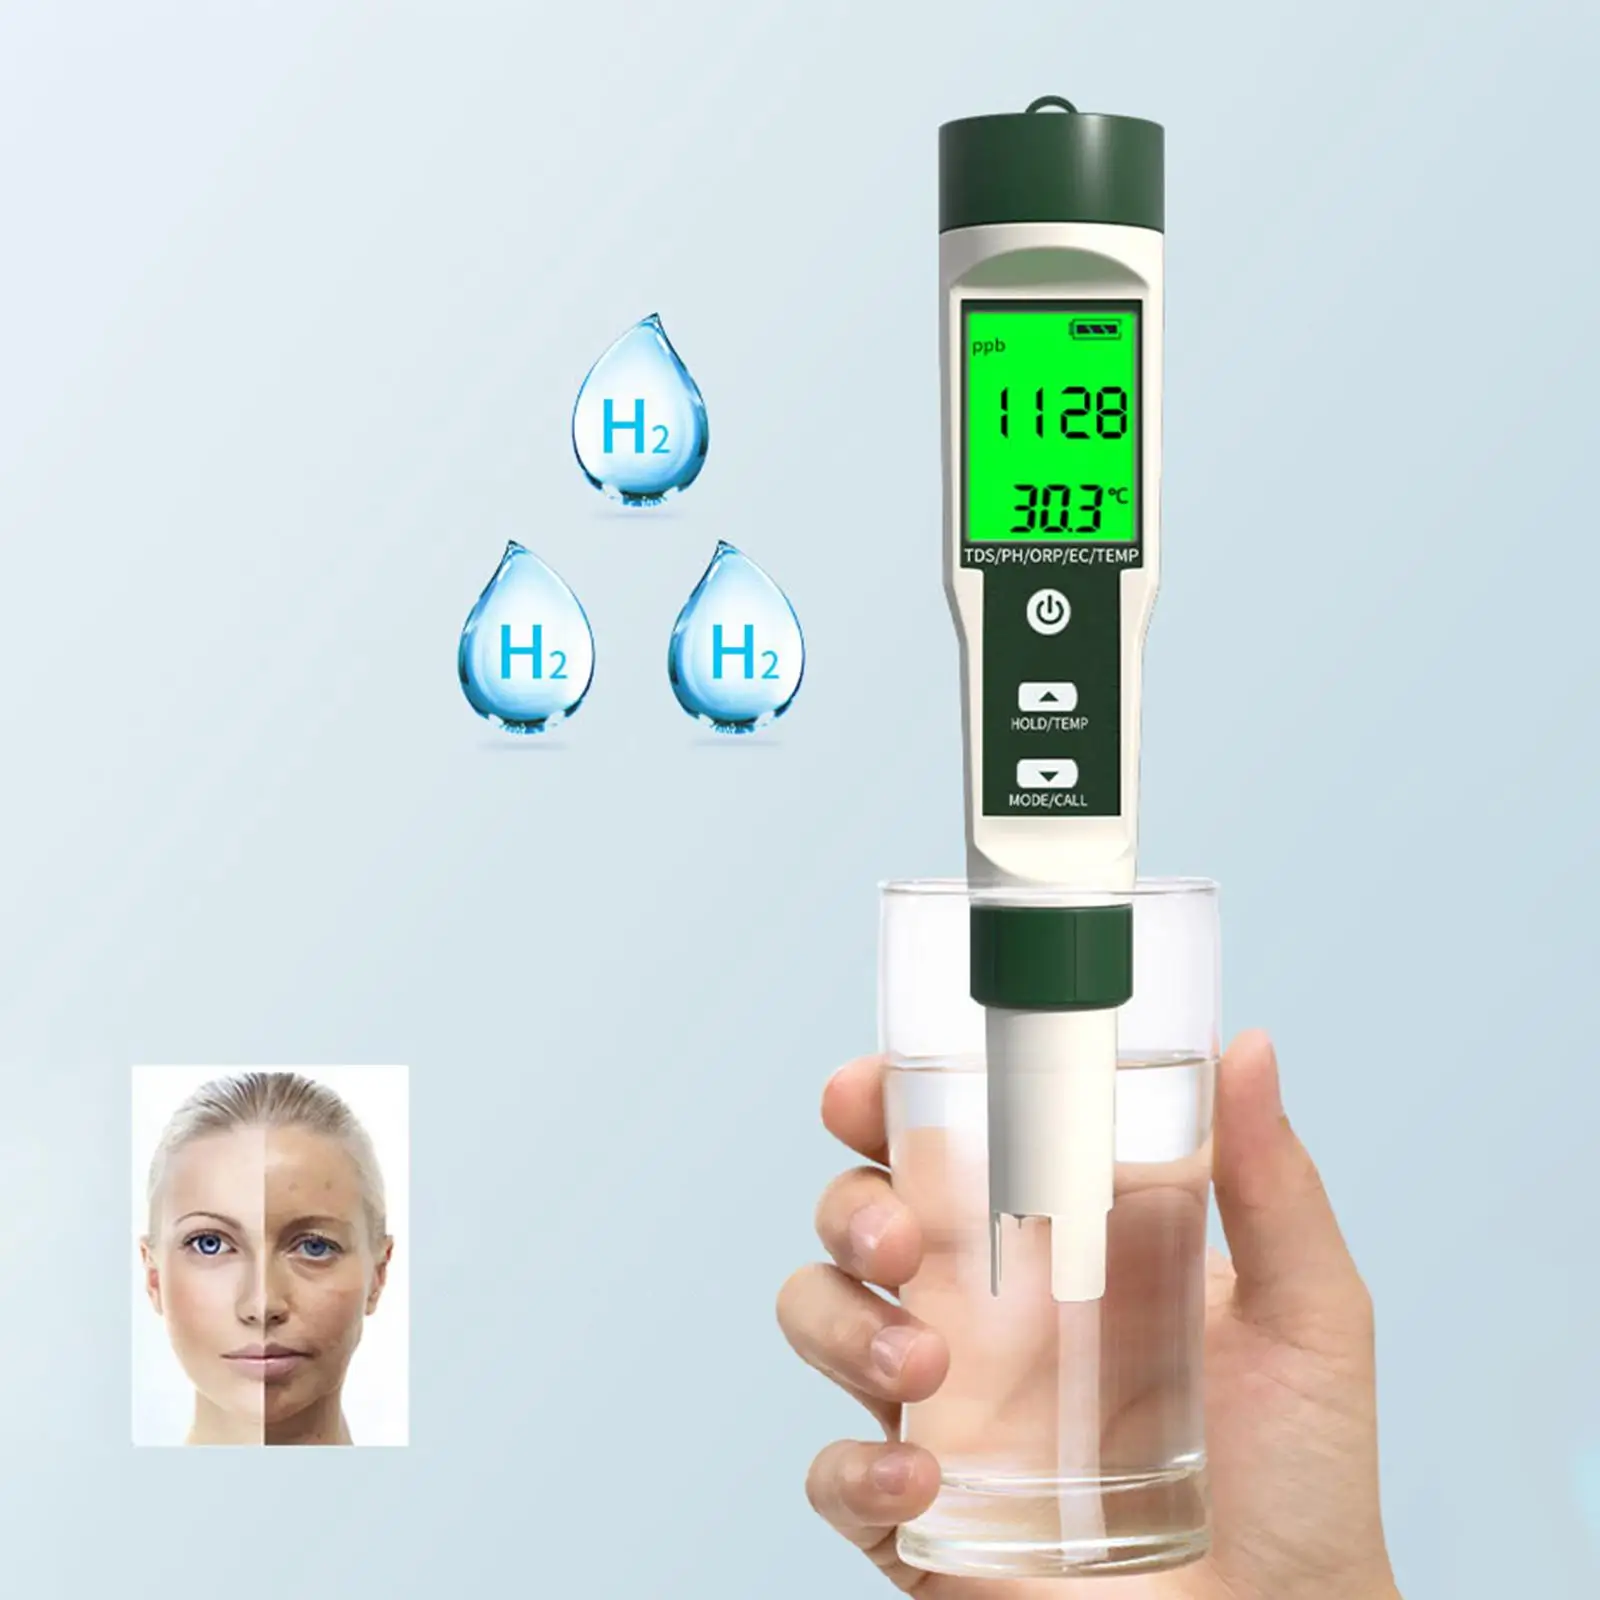 Digital Water Quality Tester Backlight Portable Handheld Water Test Meter Temperature Meter for Fish Tanks Swimming Pools Pond